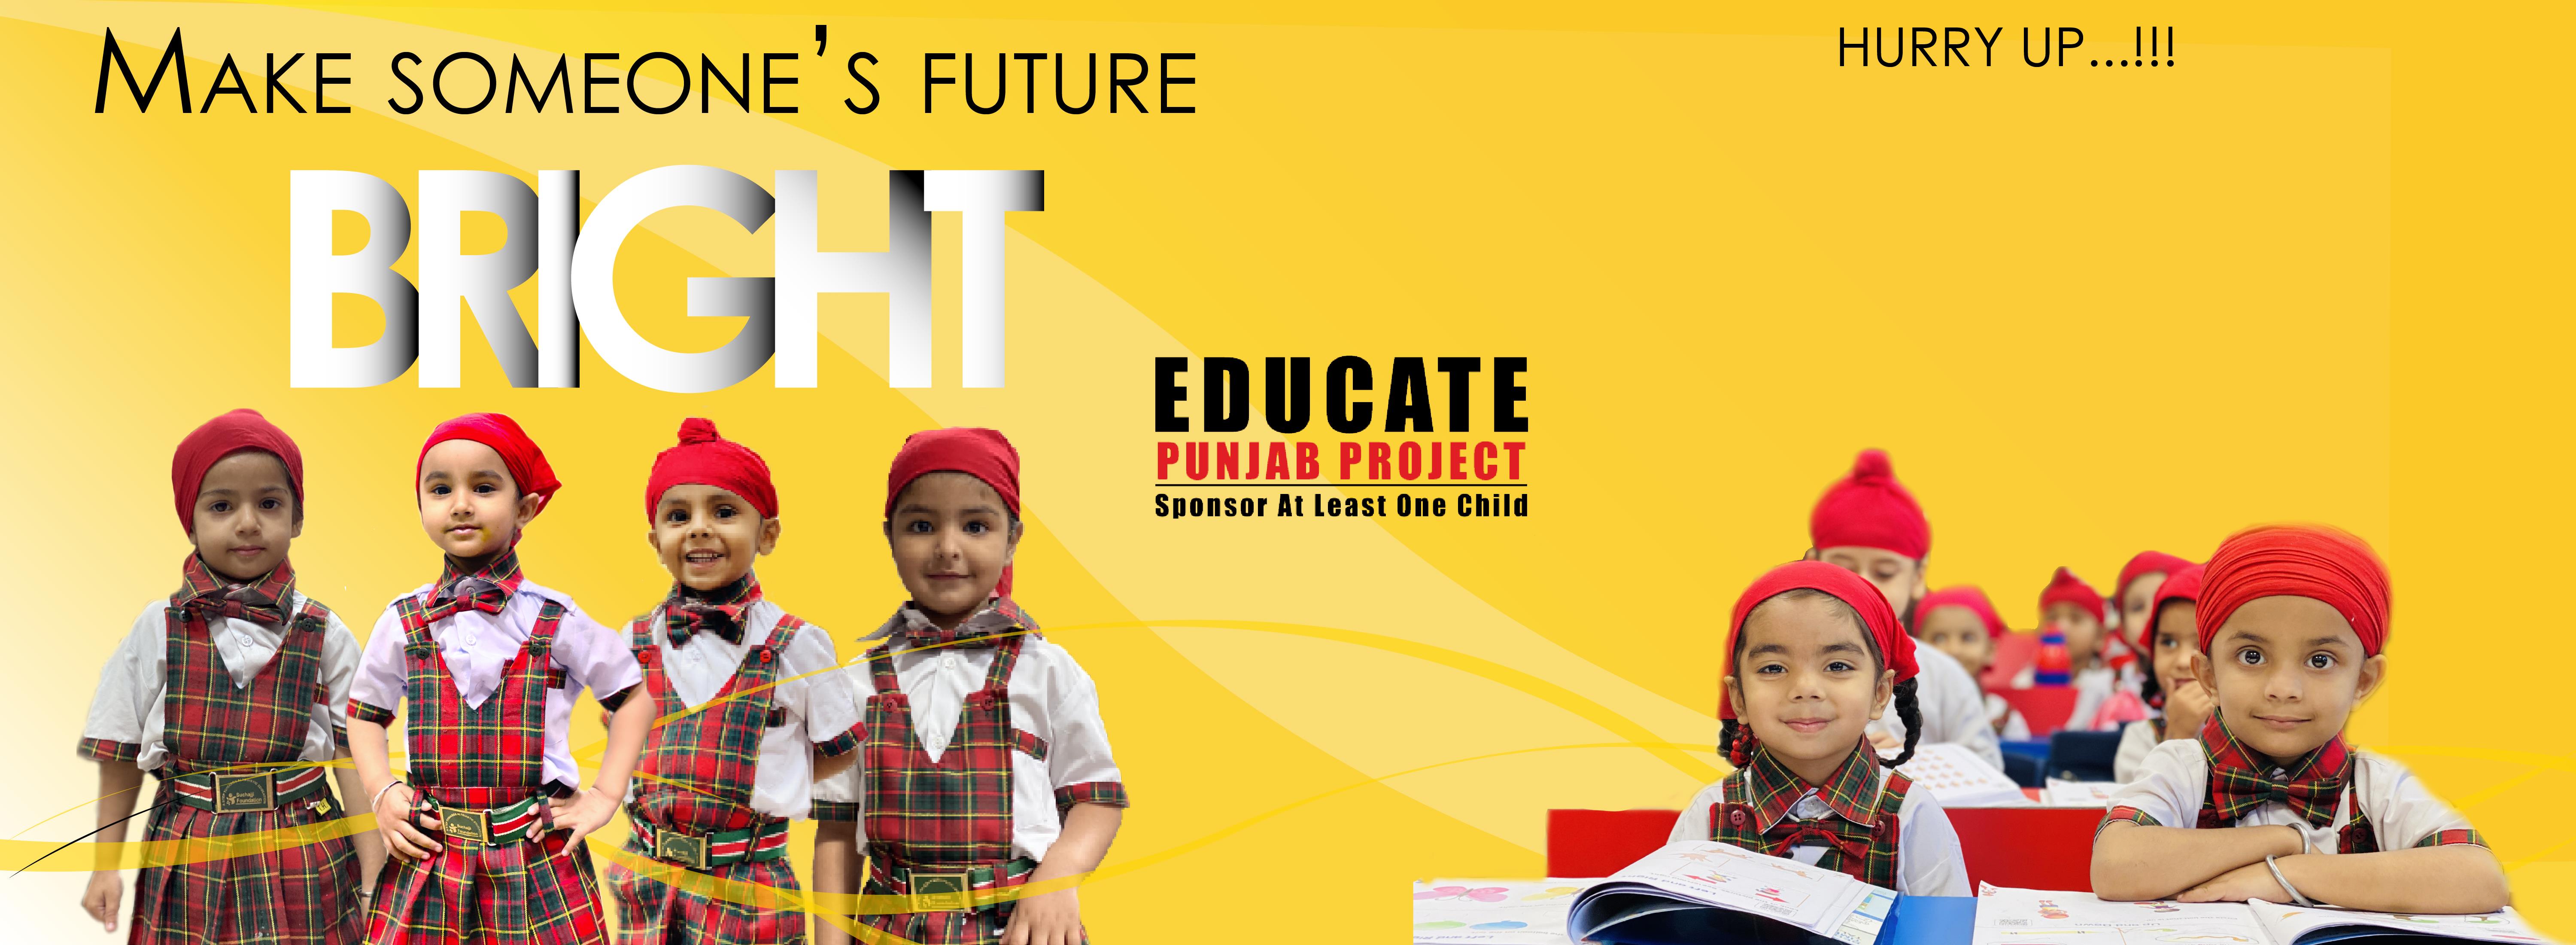 Educate Punjab Project